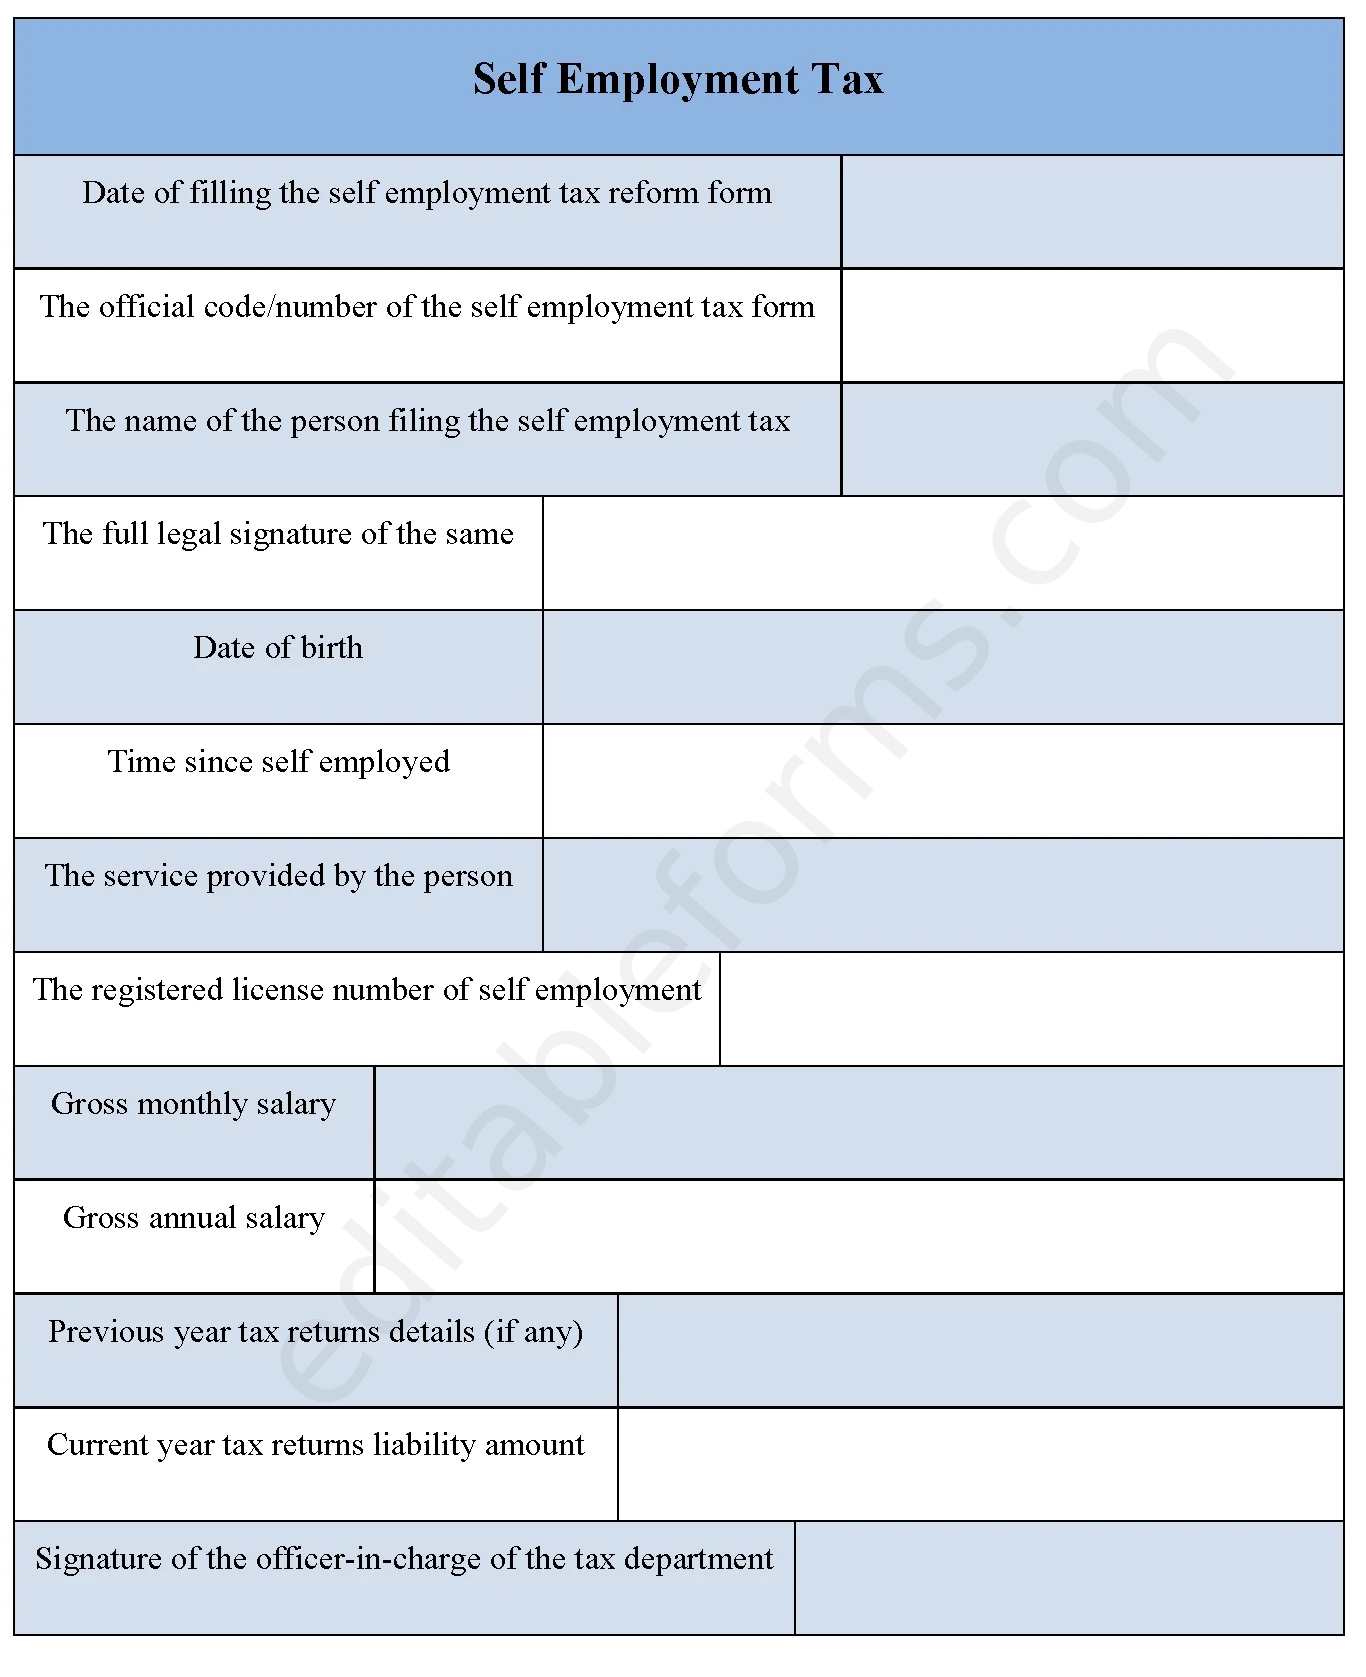 Self Employment Tax Fillable PDF Template